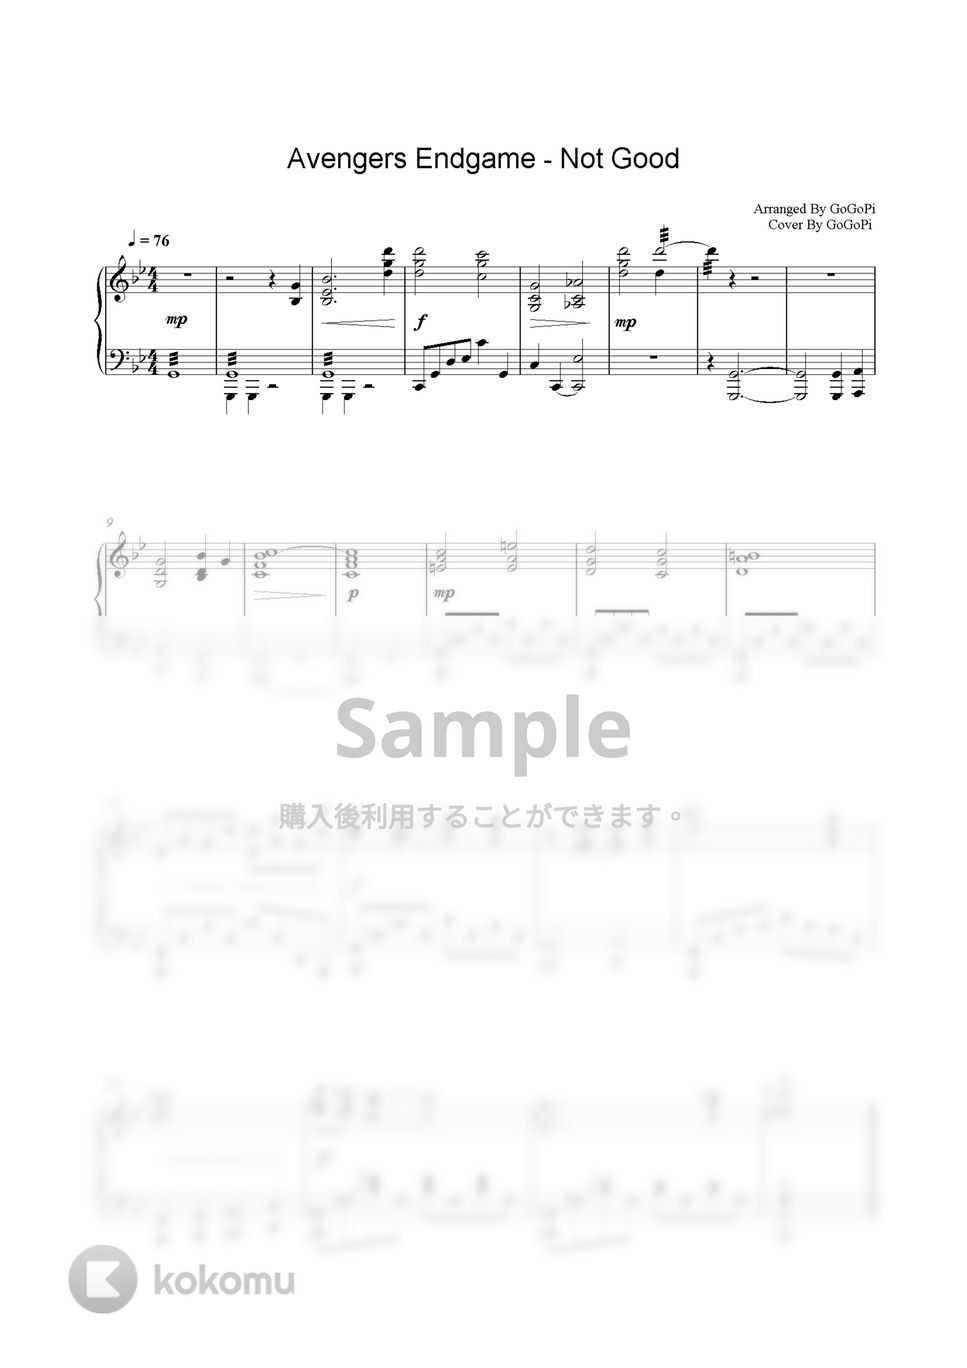 Alan Silvestri - Not Good(アベンジャーズ/エンドゲーム) (Piano Version) by GoGoPiano